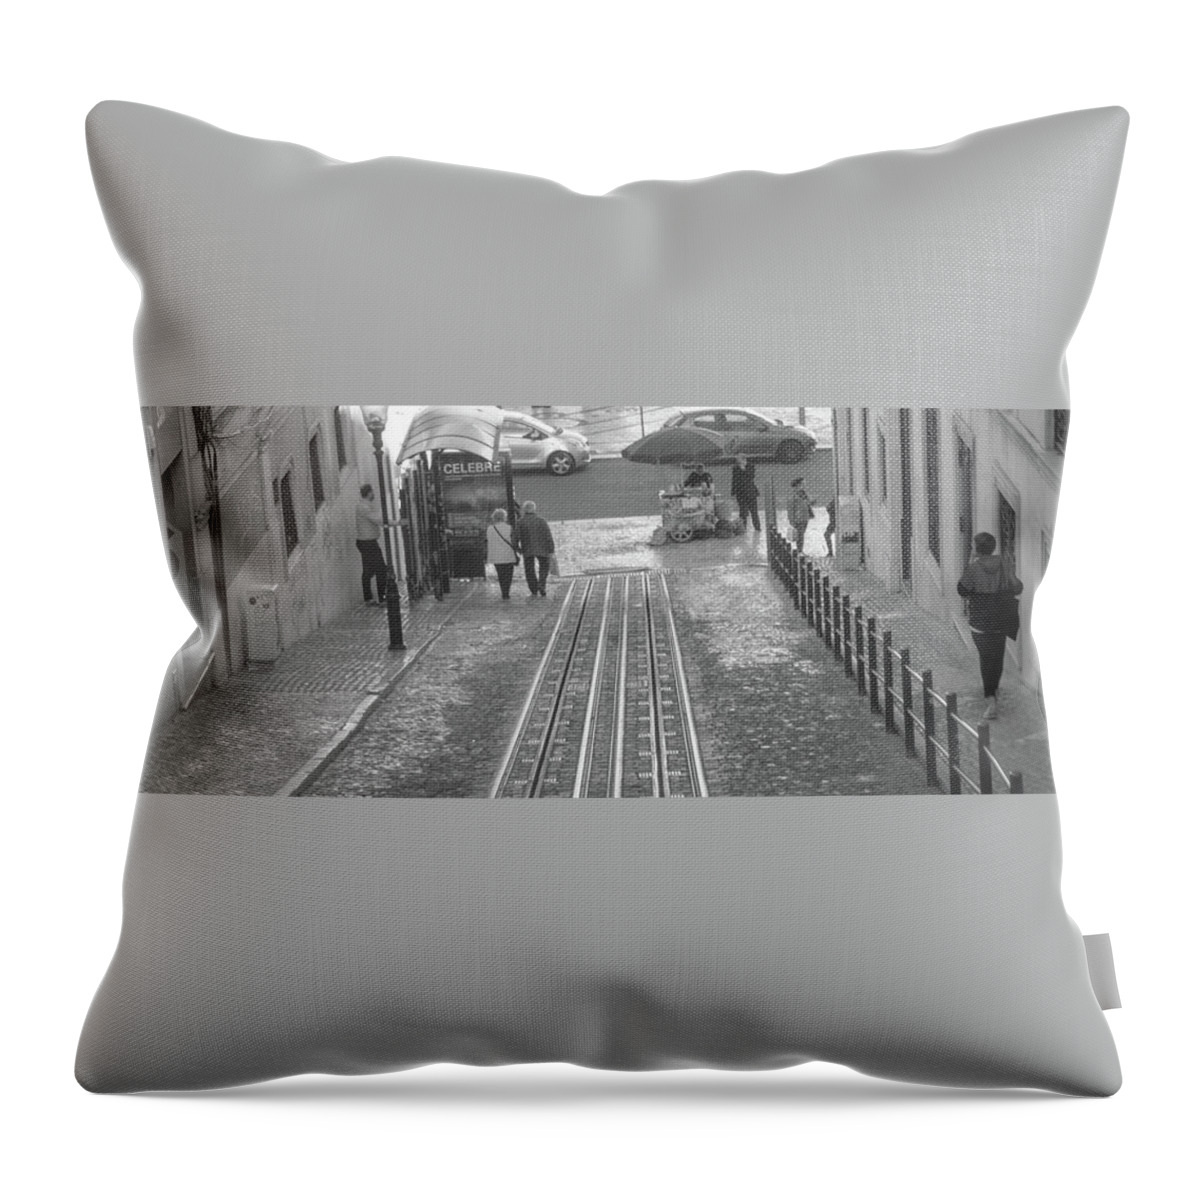 Lisbon Throw Pillow featuring the photograph Walking by the rails - Lisbon by Christina McGoran